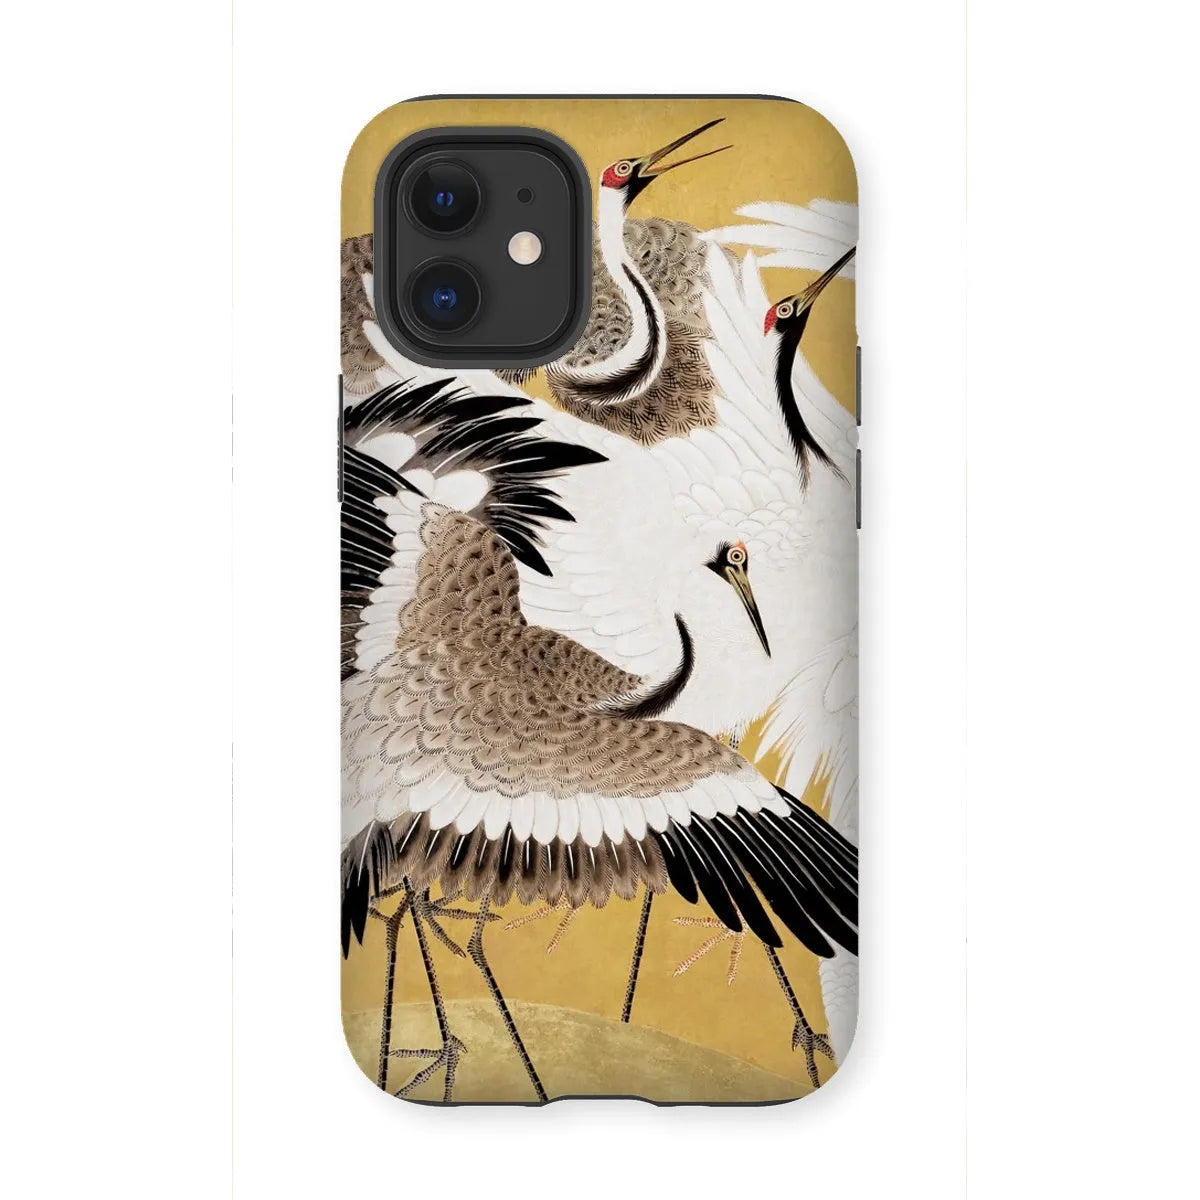 Flock Of Cranes Japanese Bird Art Phone Case - Ishida Yūtei - Iphone 12 Mini / Matte - Mobile Phone Cases - Aesthetic